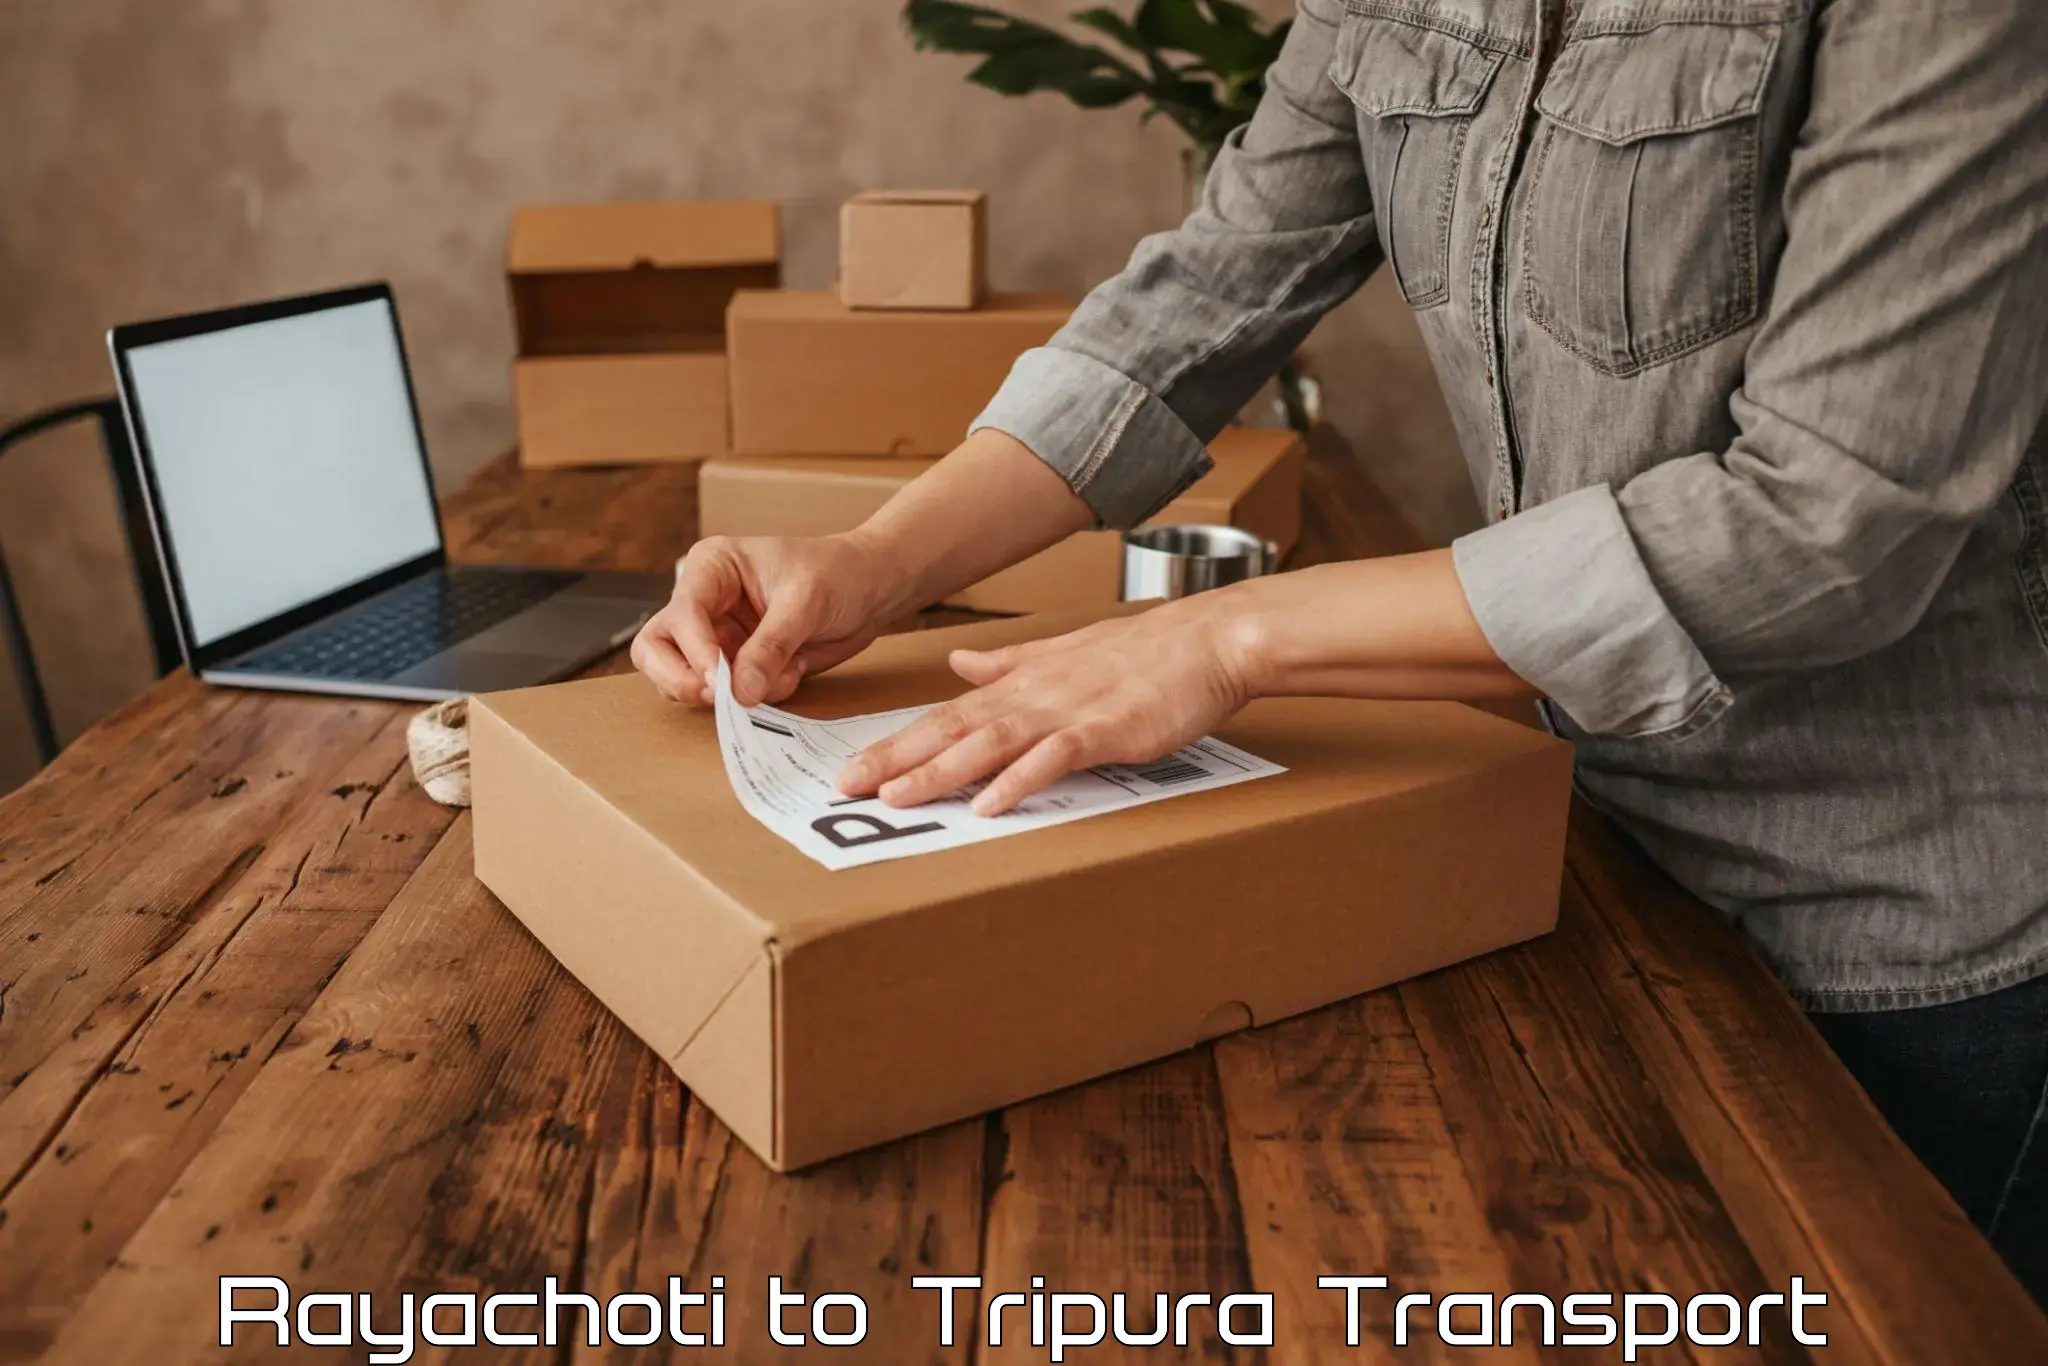 Vehicle parcel service Rayachoti to North Tripura